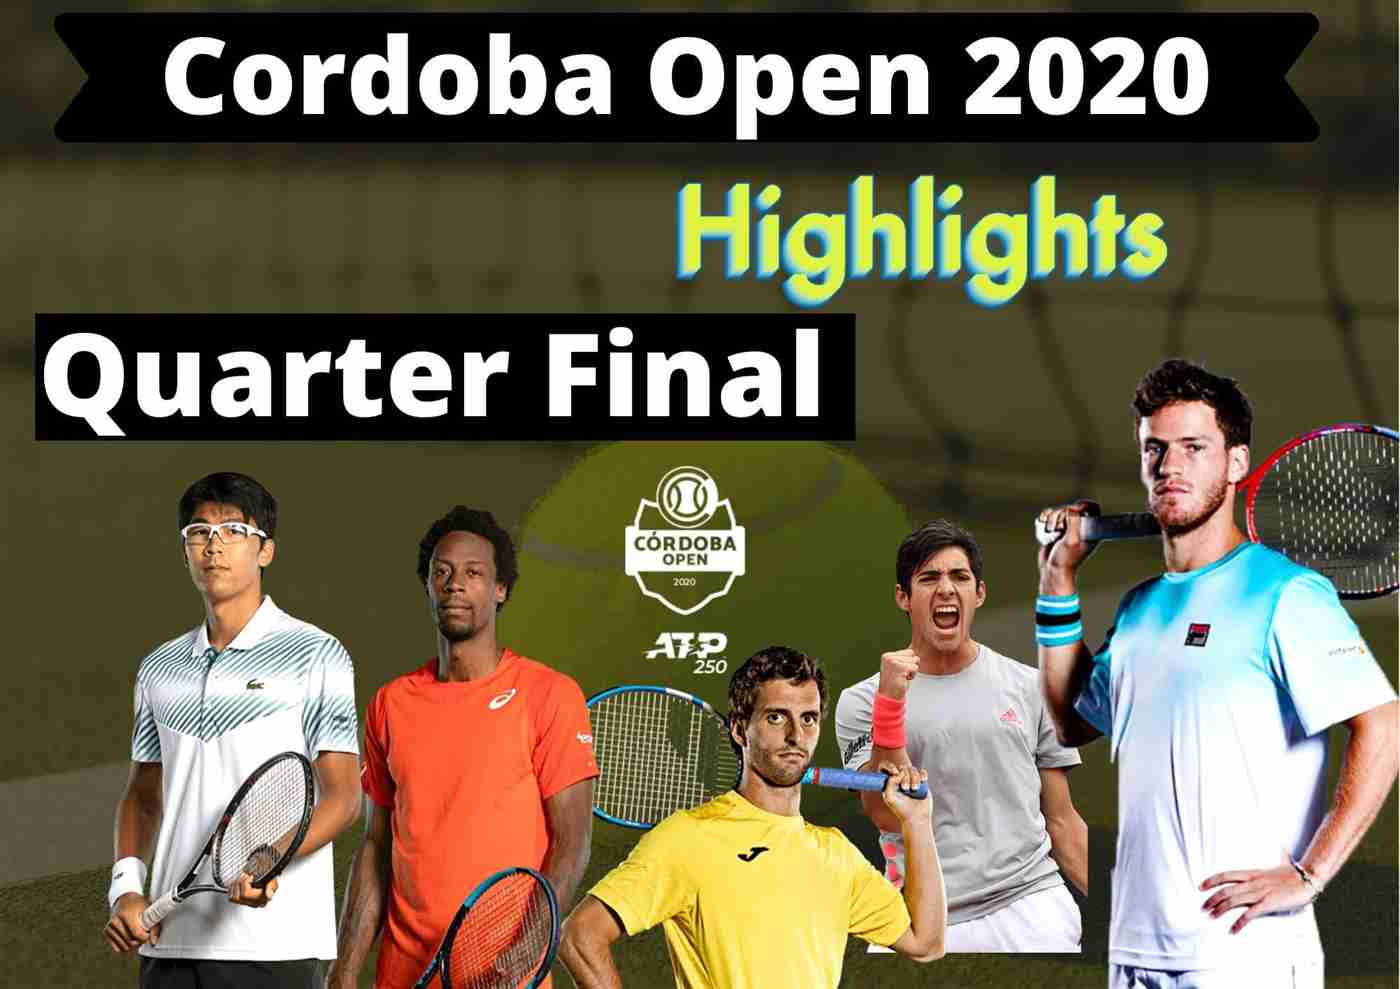 L Djere Vs J Londero QuarterFinal Highlights 2020 Cordoba Open